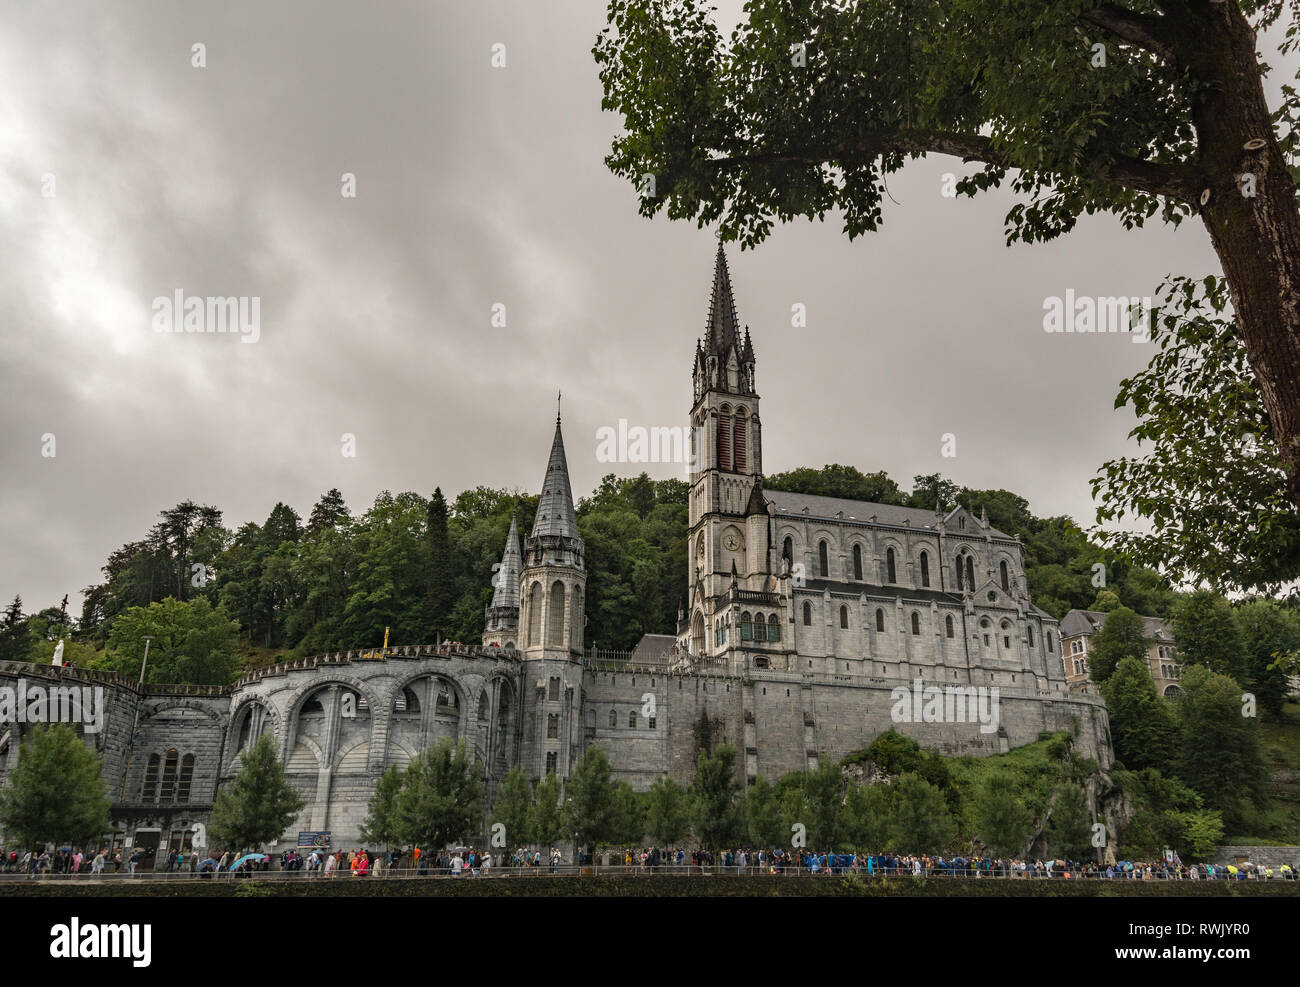 St. Mary's Ukrainian Catholic Church, Lourdes, France Stock Photo - Alamy